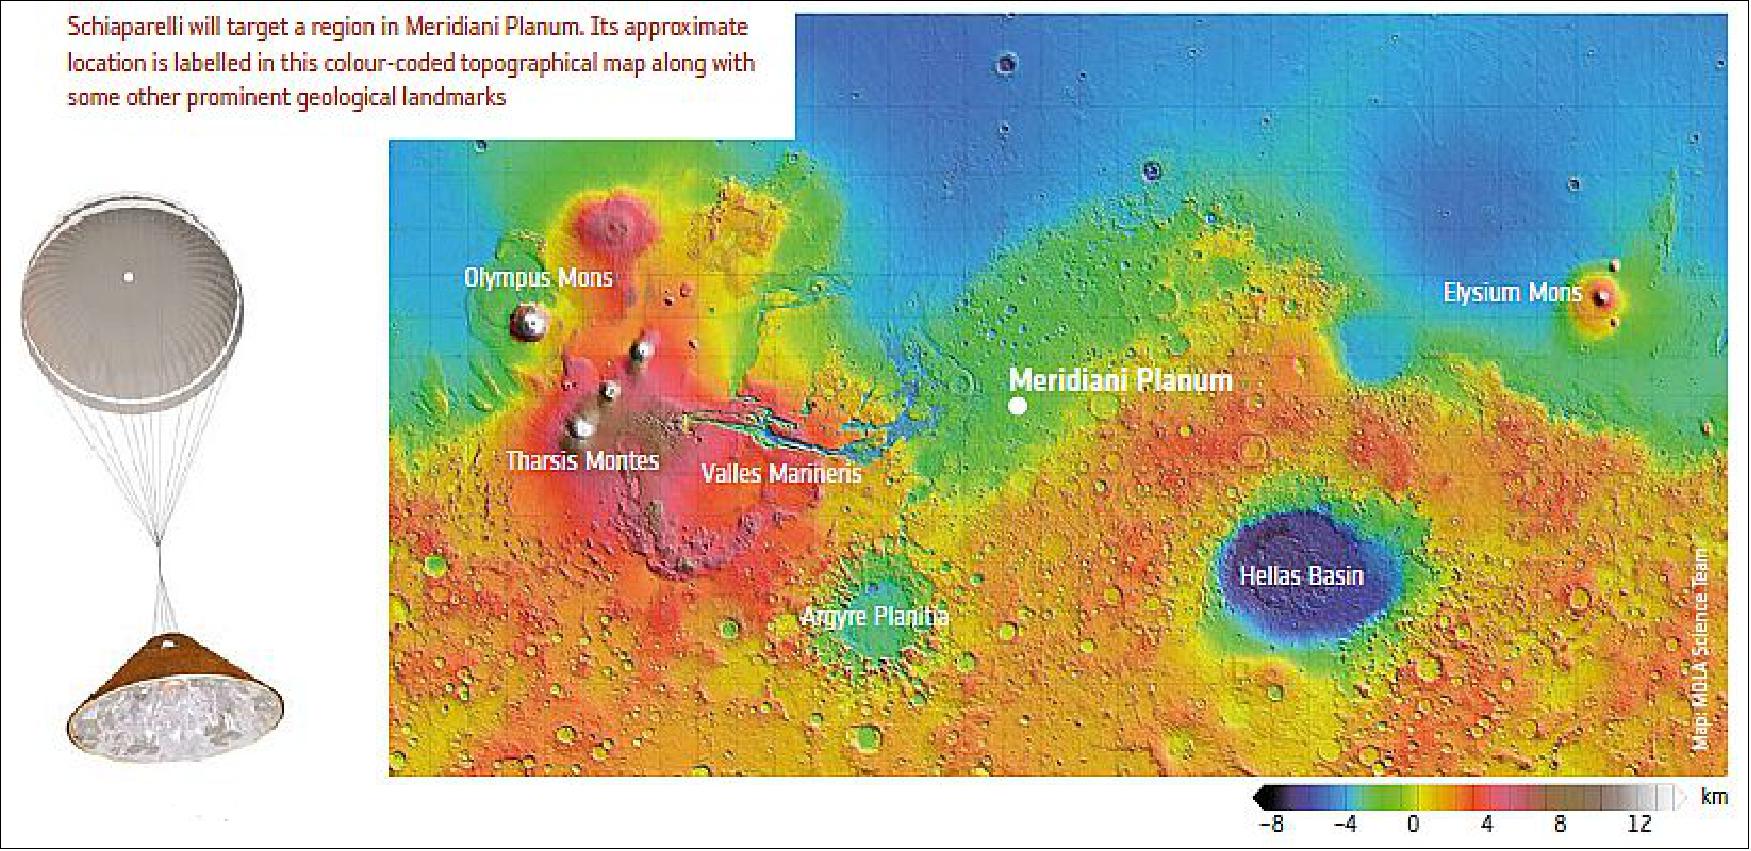 Figure 151: Illustration of Schiaparelli's landing site, acquired by the Mars Reconnaissance Orbiter (image credit: NASA/JPL, Arizona State University, ESA, Ref. 6)